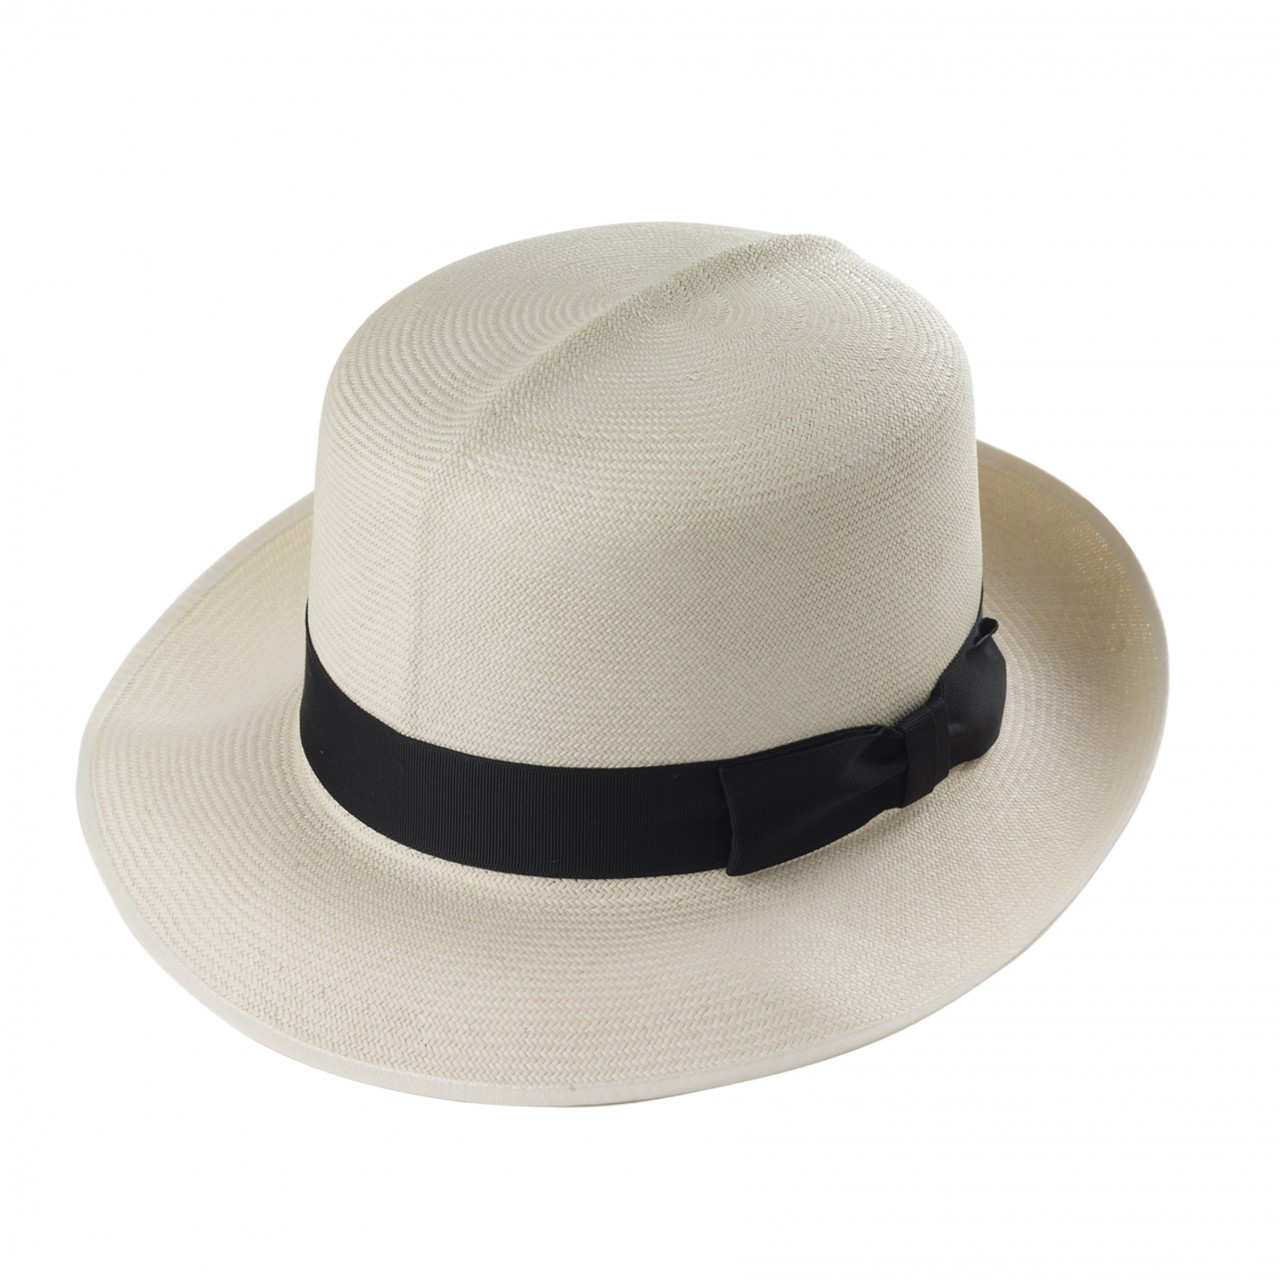 1 New message) Folder Panama - Cuenca Optimo 20-22 - The Panama Hat Company